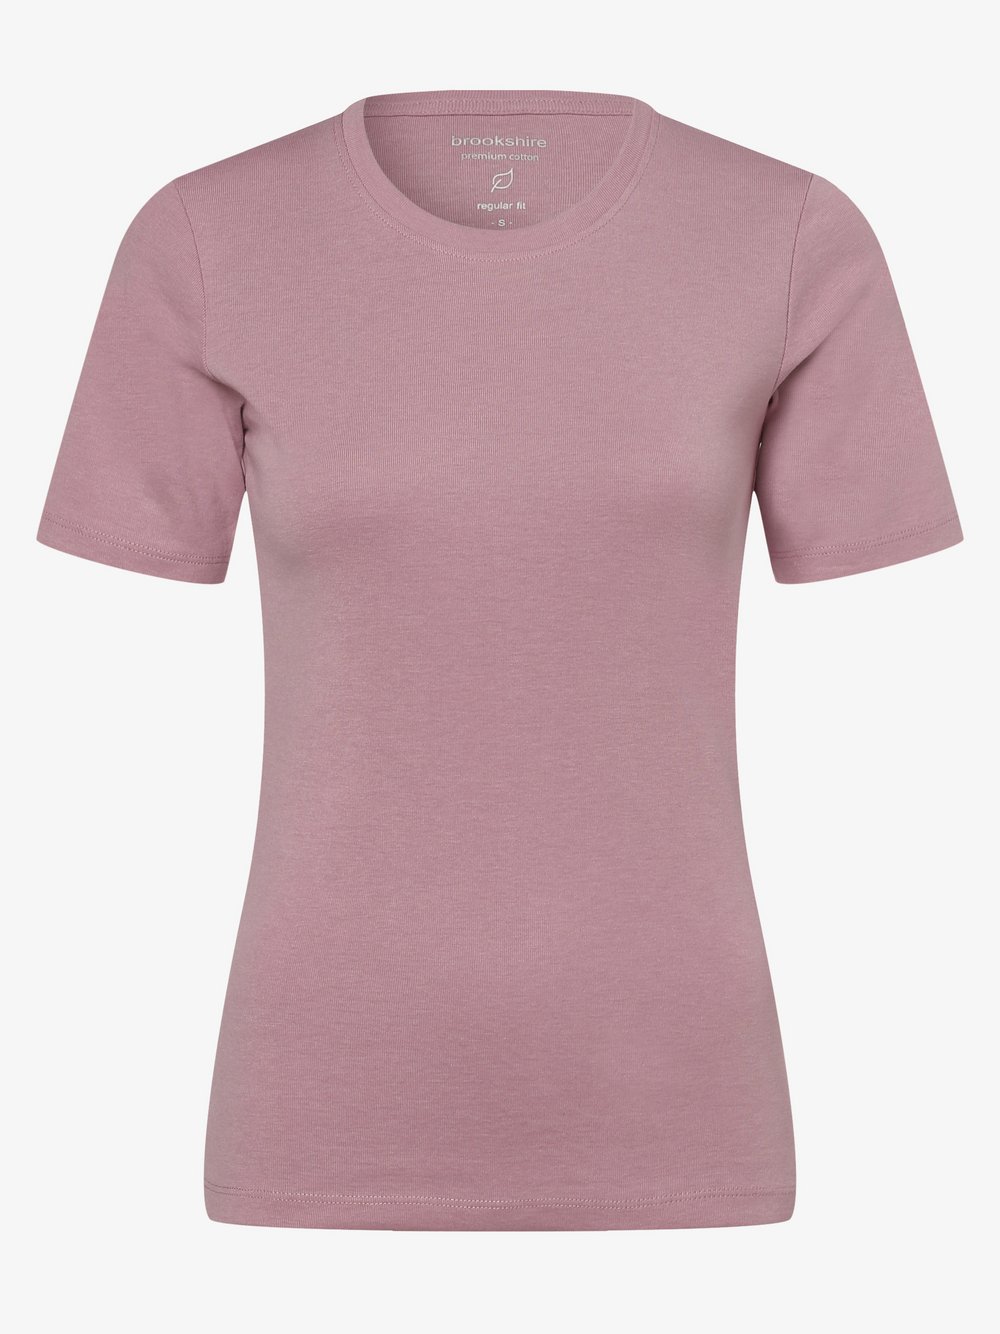 brookshire - T-shirt damski, lila